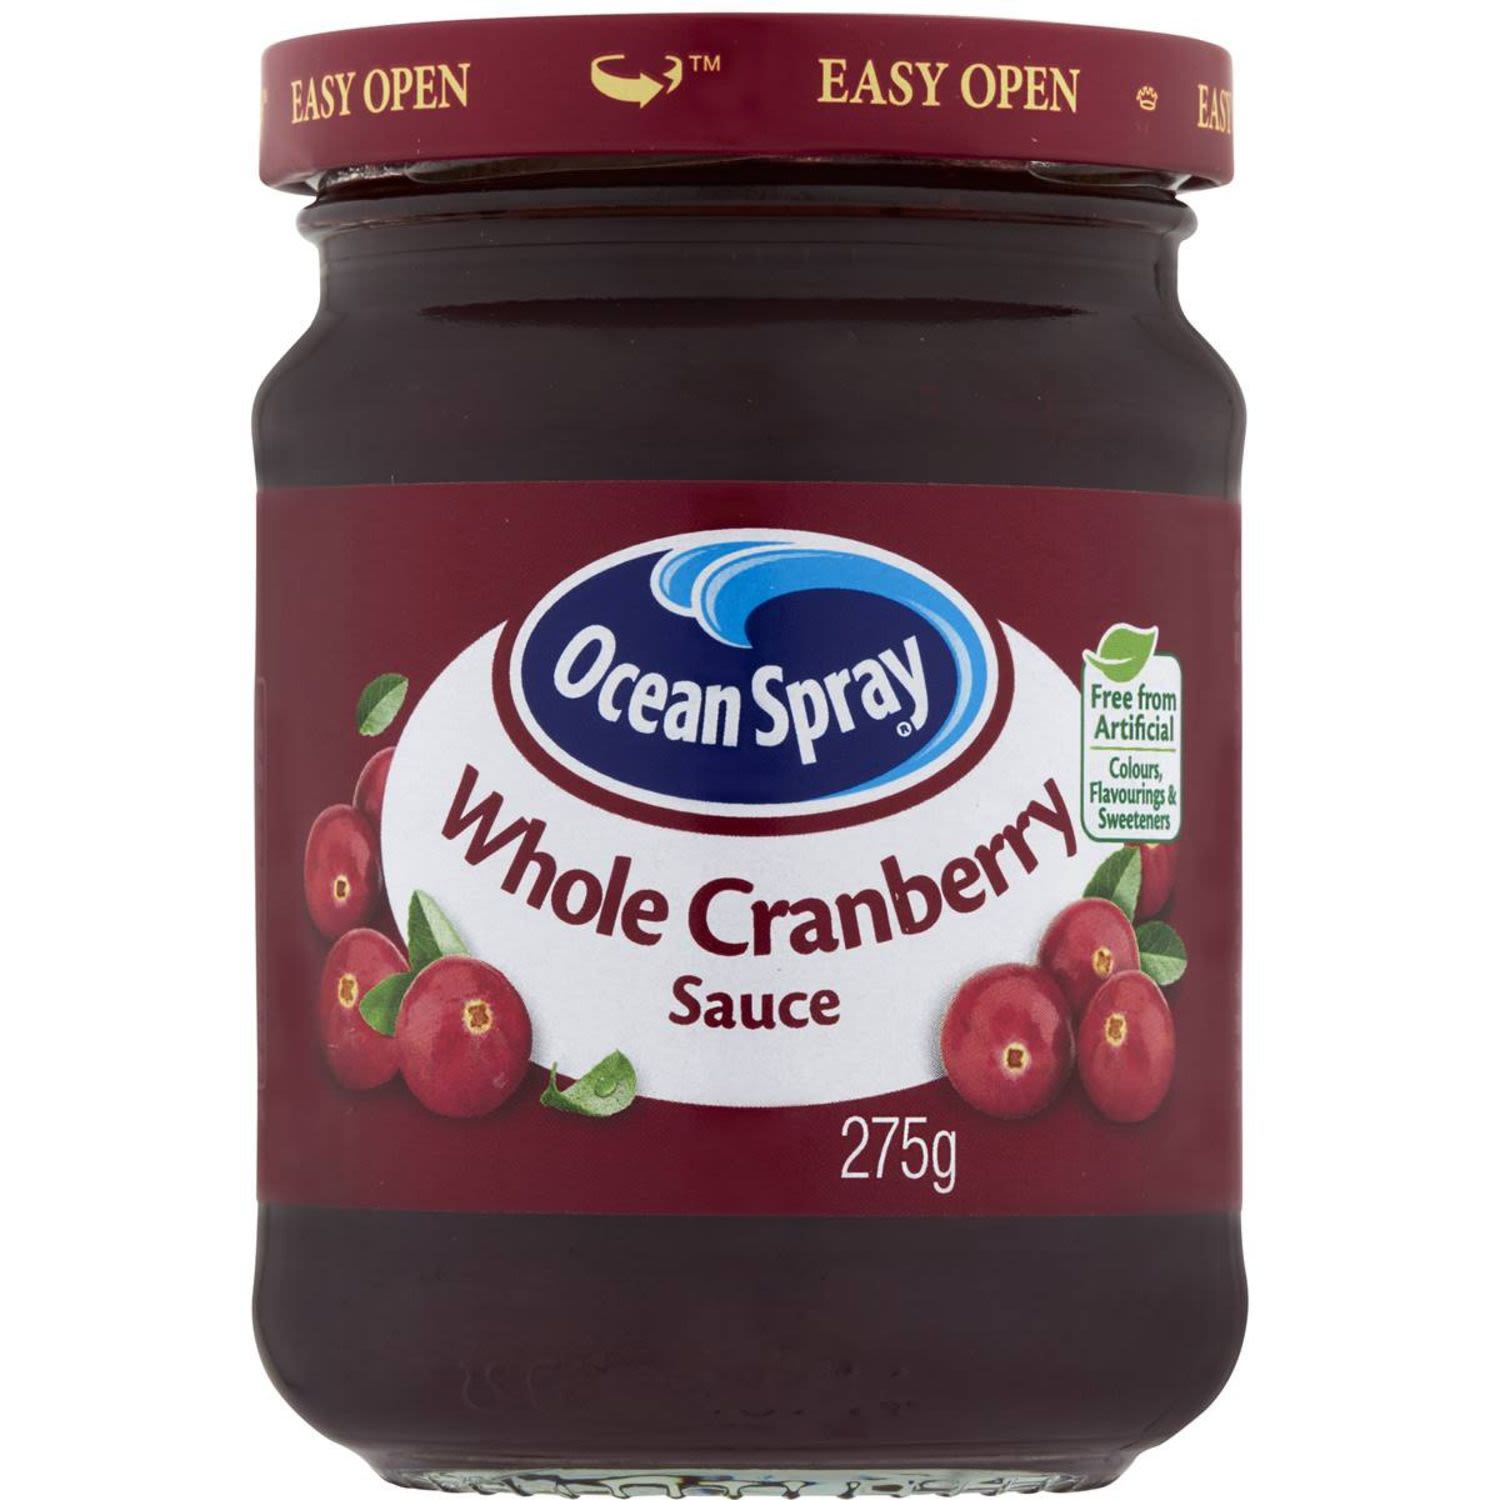 Ocean Spray Whole Cranberry Sauce 275gm